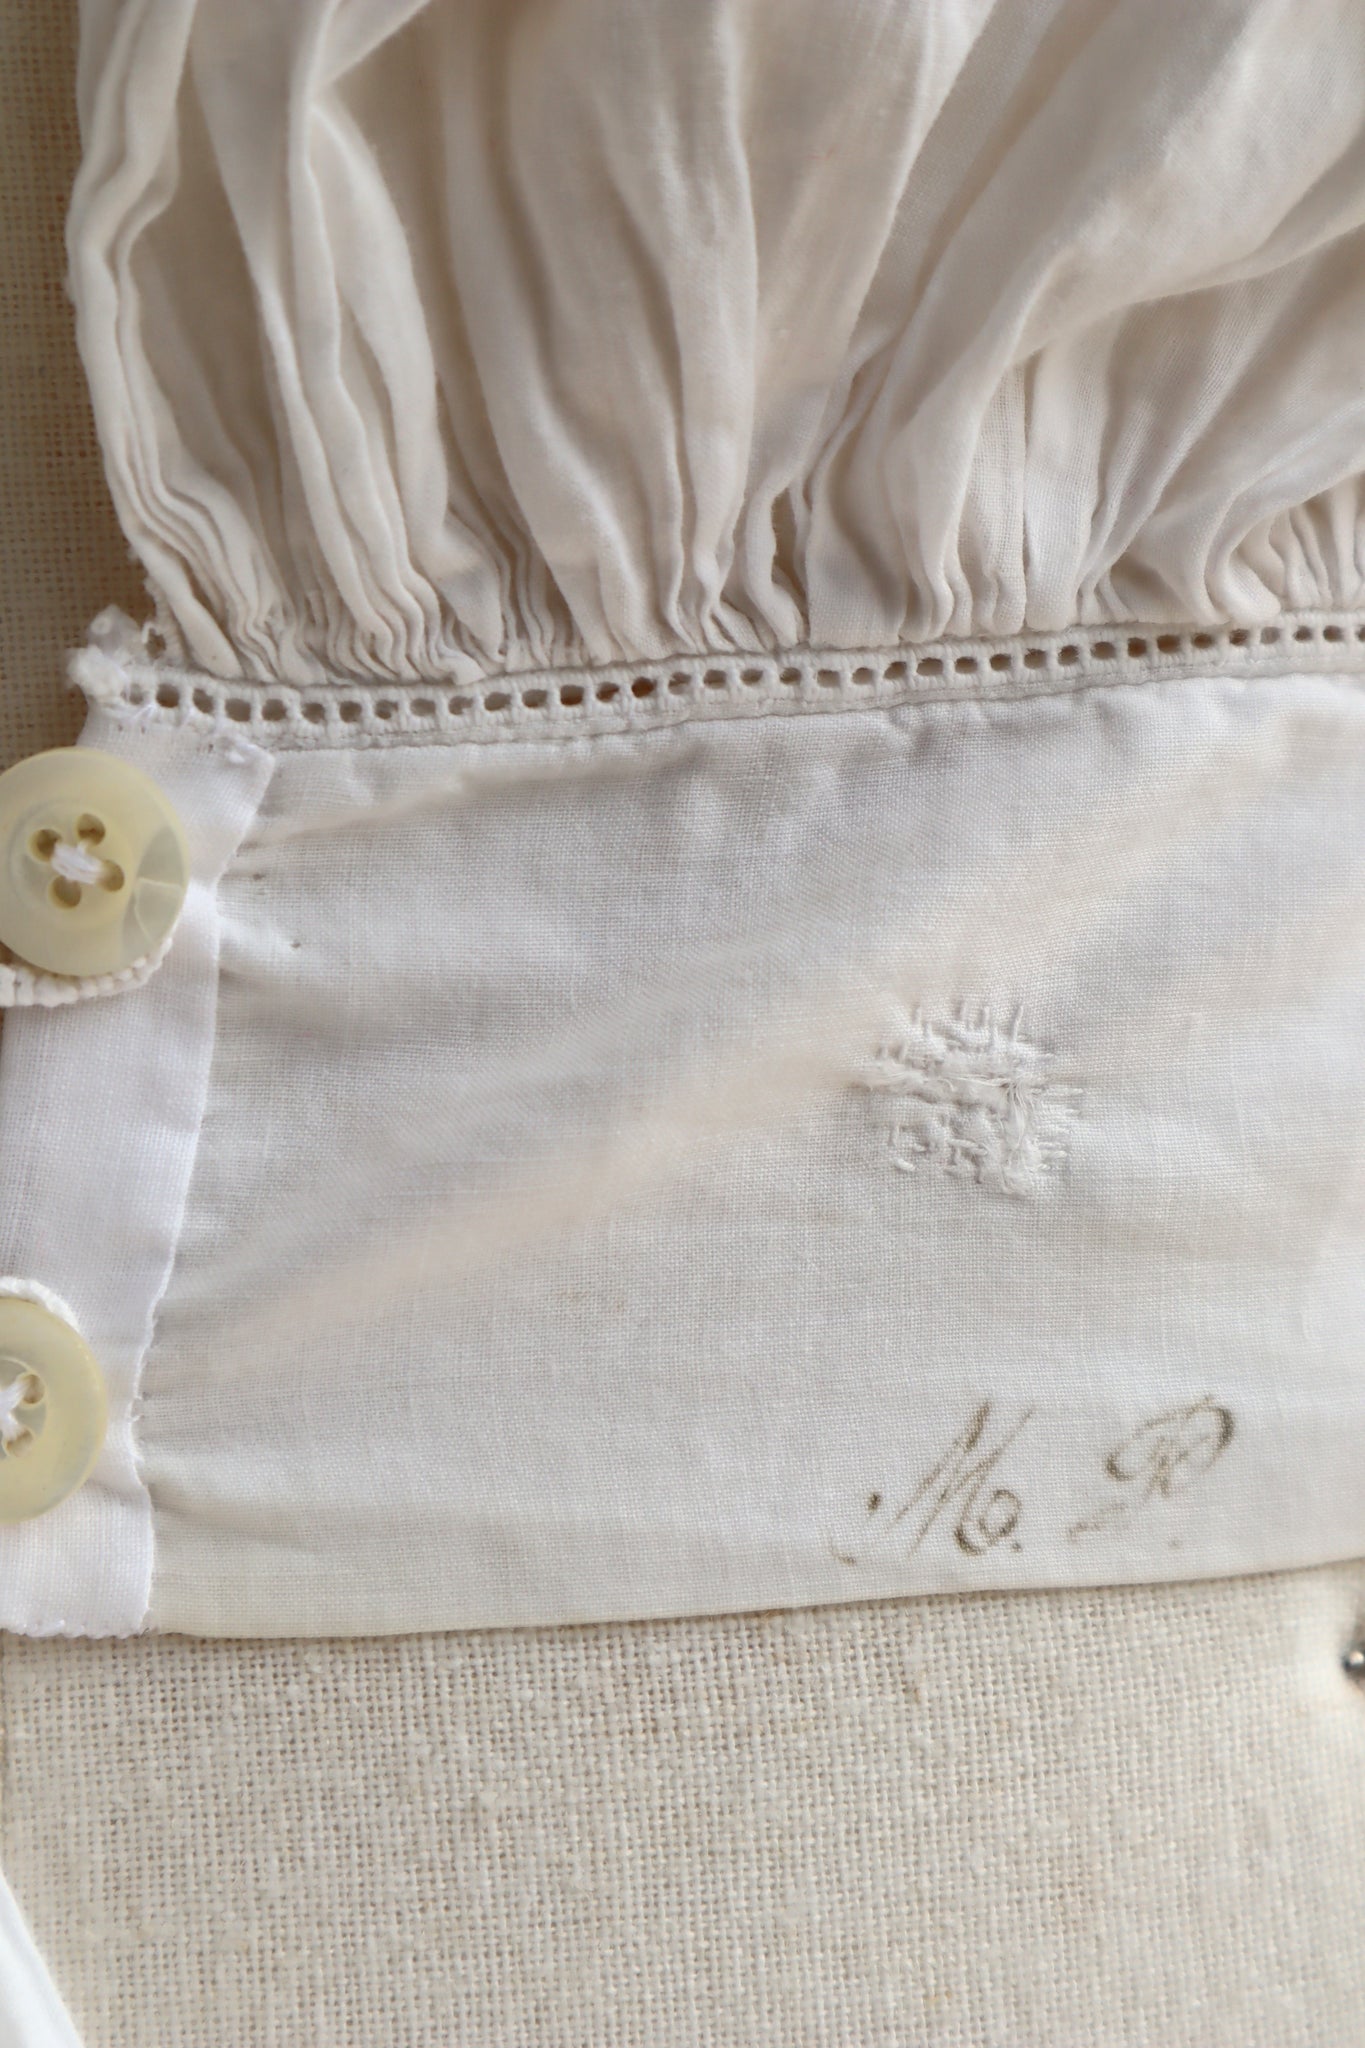 1910s Boudoir Cotton Wrap Jacket